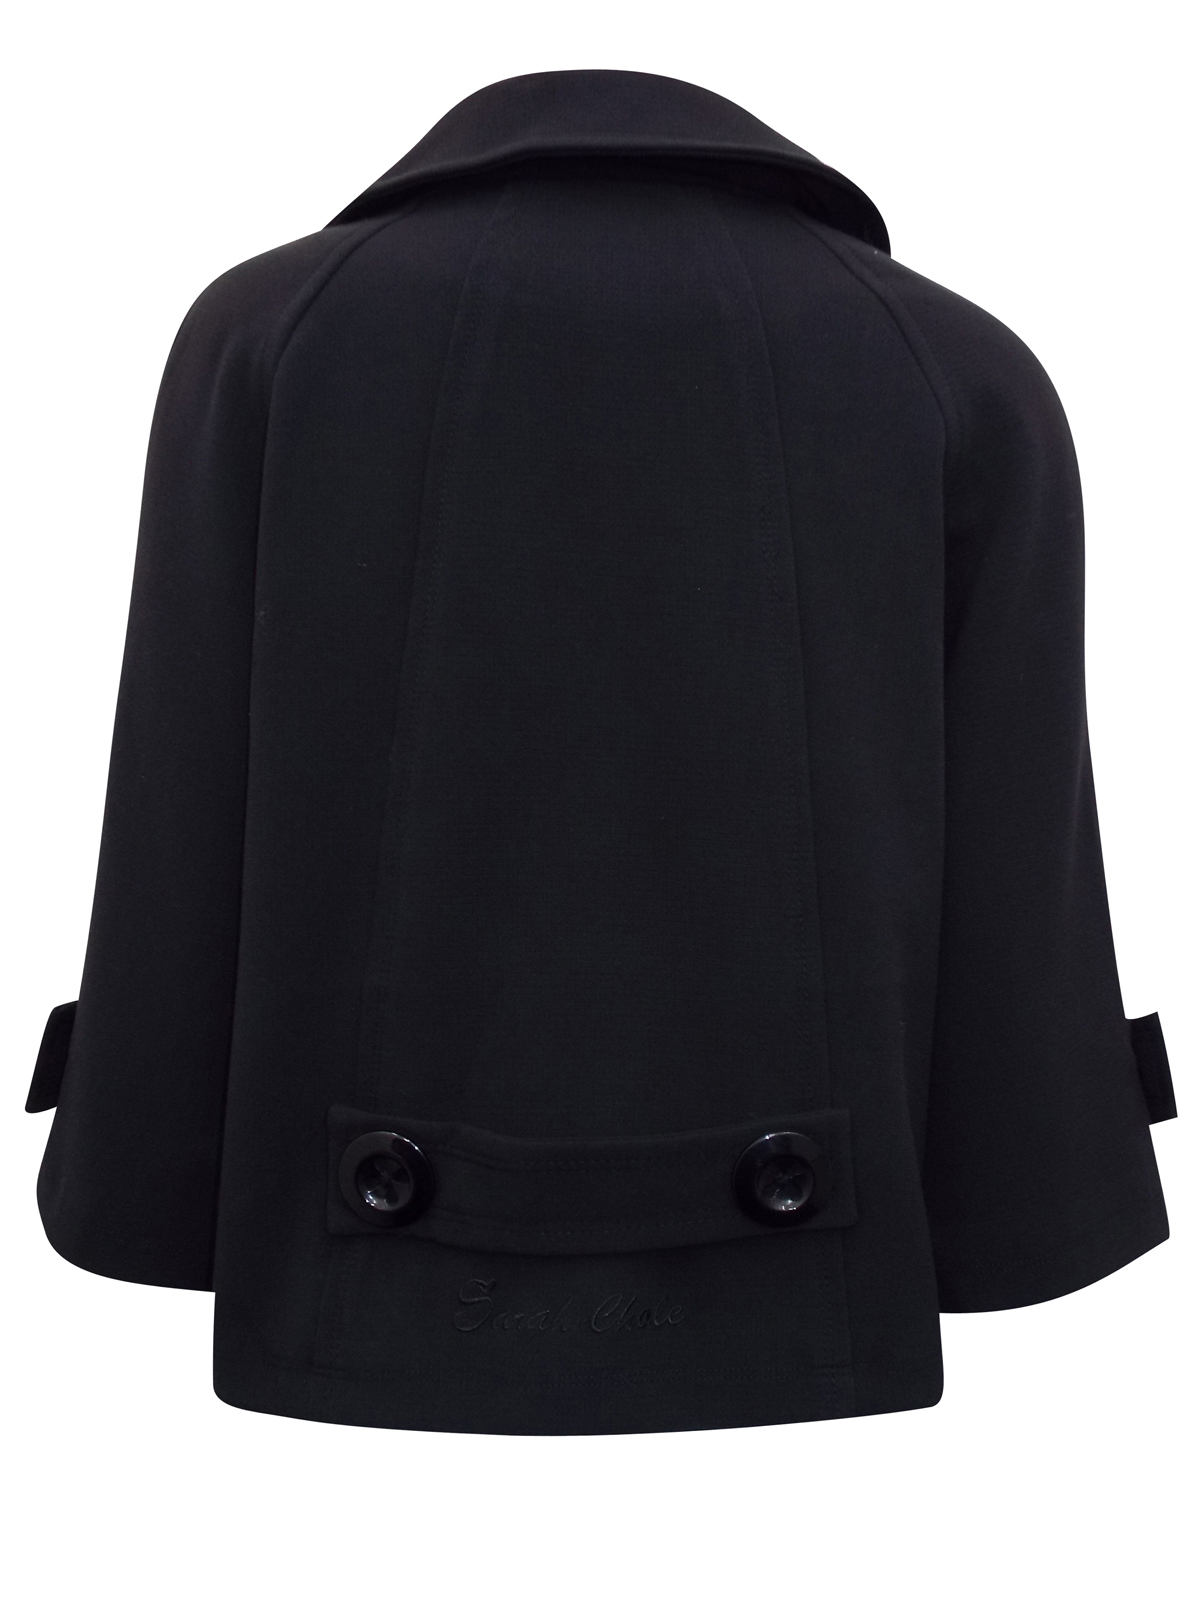 Sarah Chole - - Sarah Chole BLACK Double Button 3/4 Sleeve Jacket ...